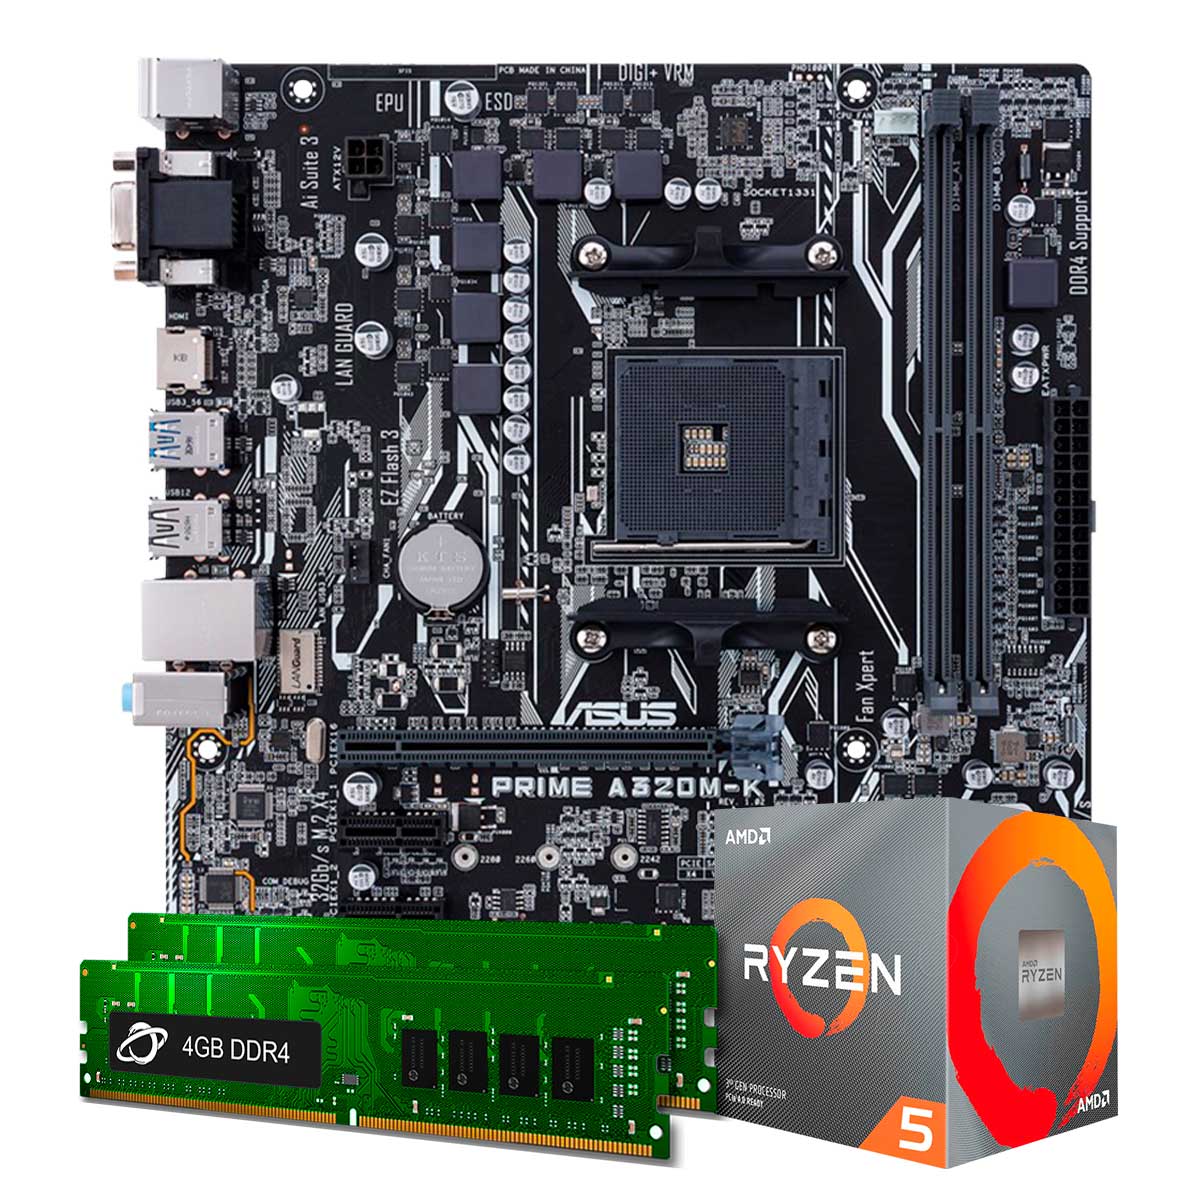 Kit Upgrade Processador AMD Ryzen™ 5 3600 + Placa Mãe Asus PRIME A320M-K/BR + Memória 8GB DDR4